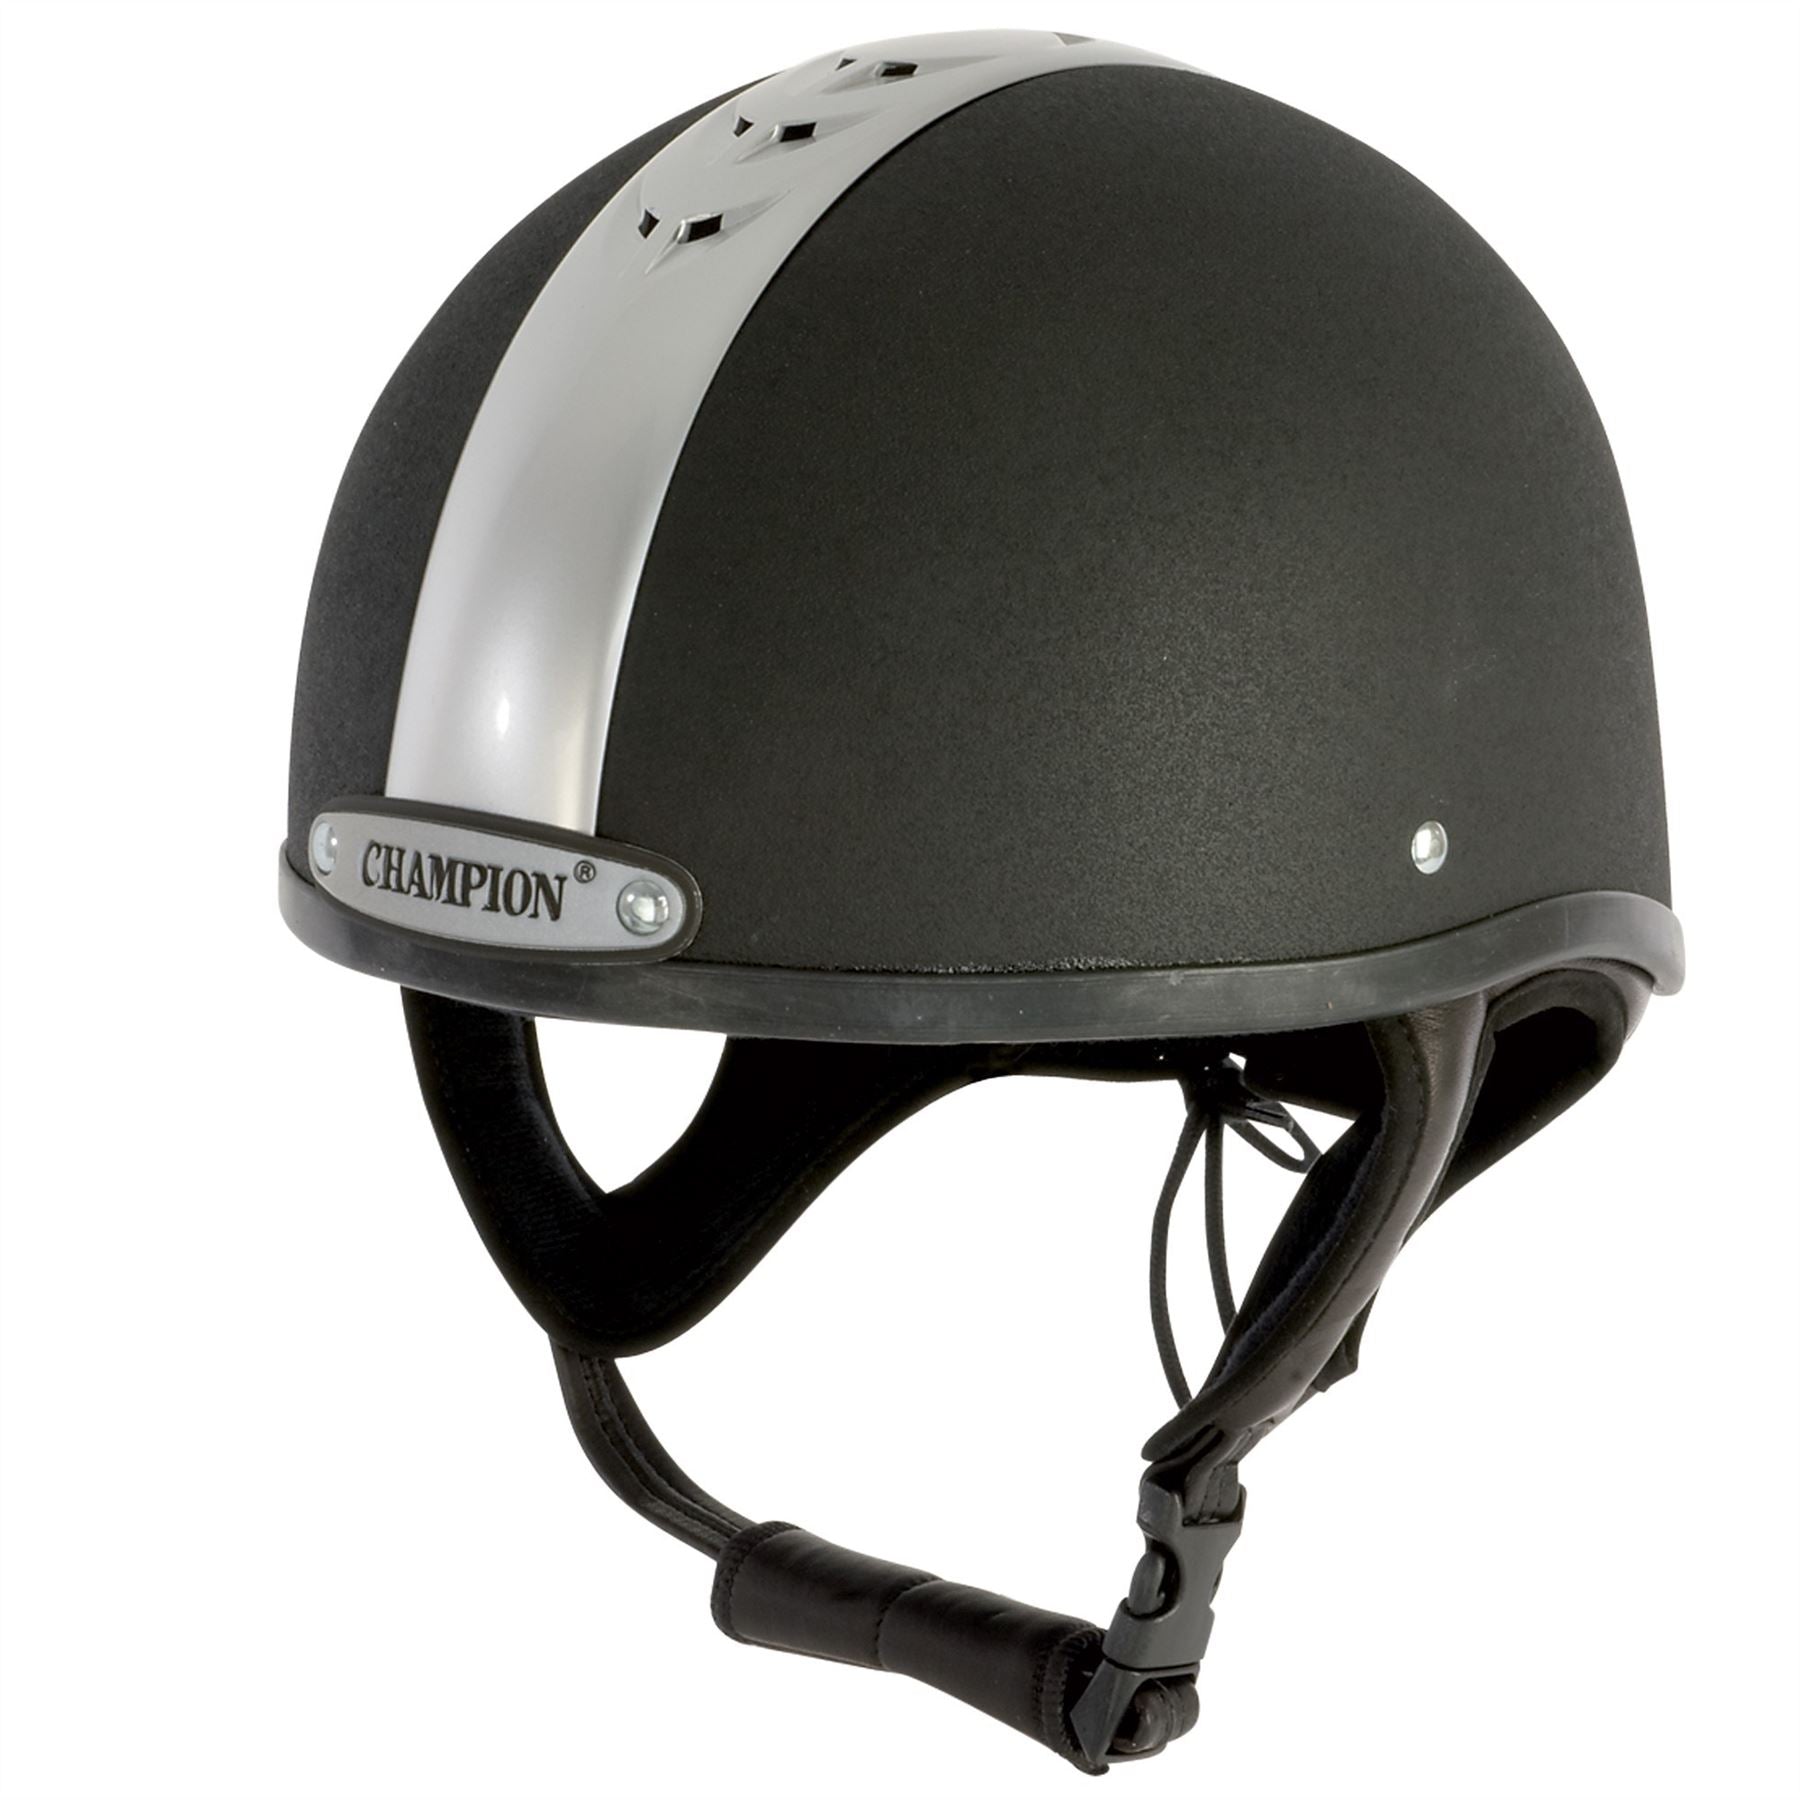 Champion Ventair Deluxe Childs Skull Helmet - Just Horse Riders